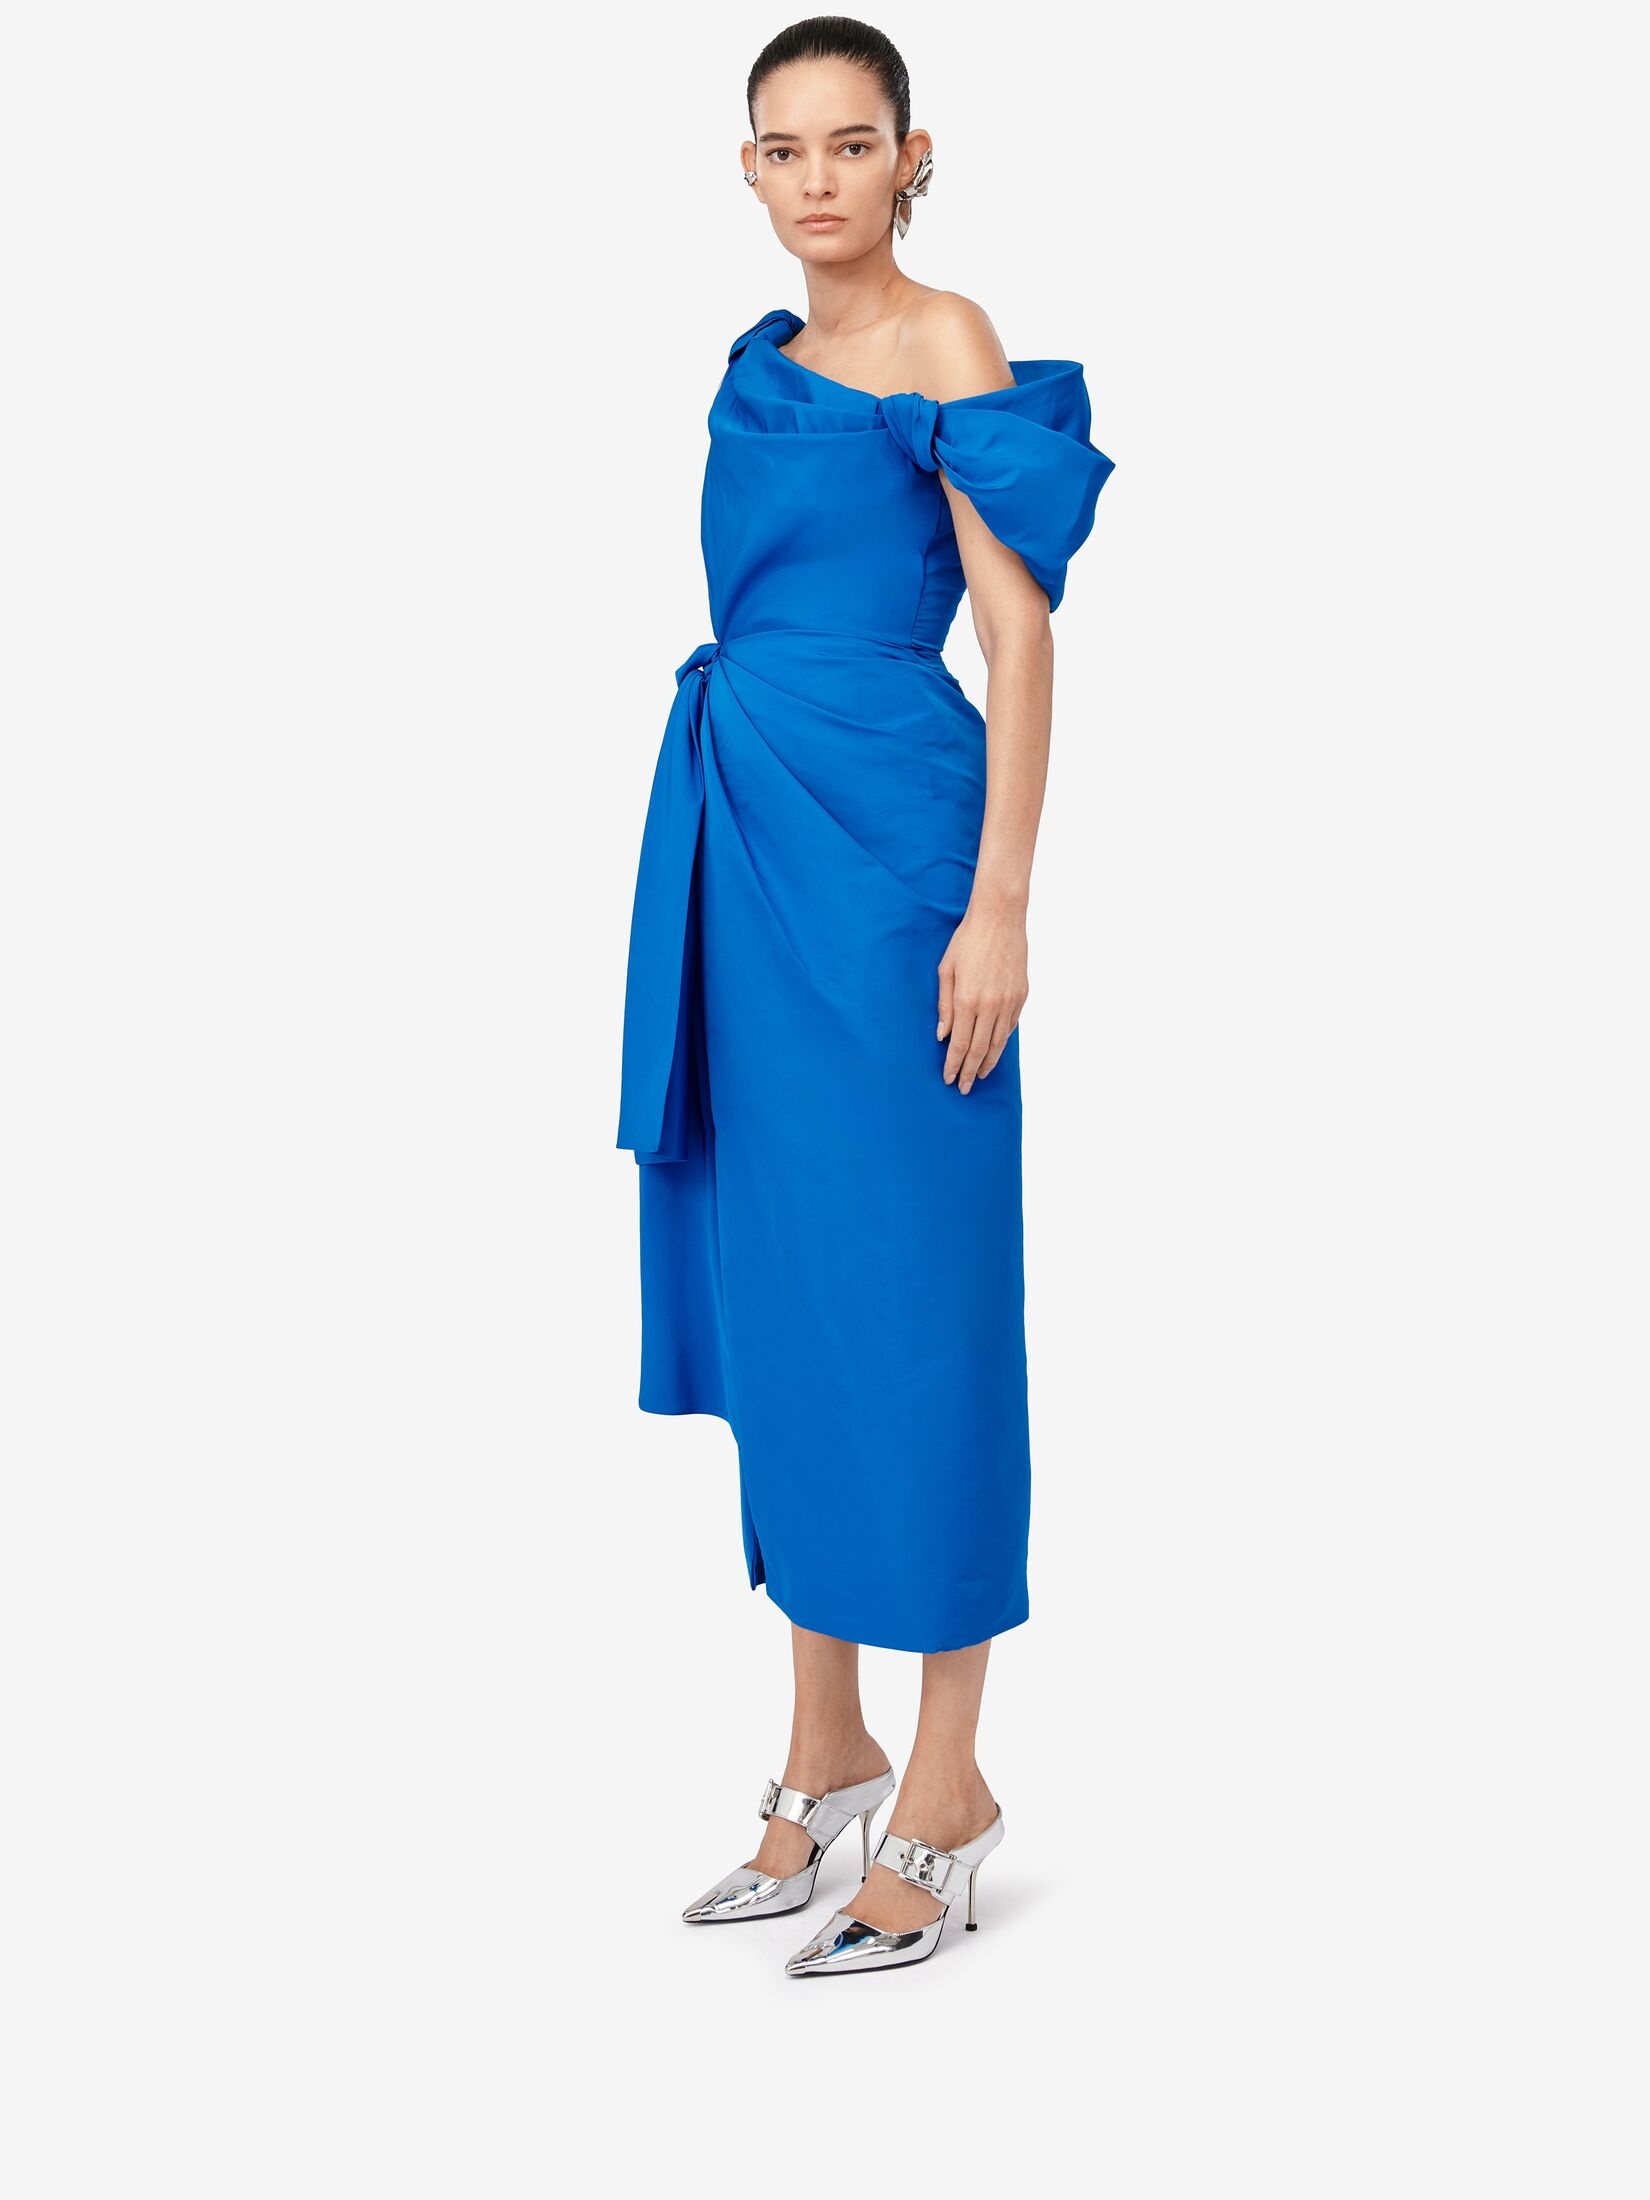 Women's Knotted Asymmetric Pencil Dress in Lapis Blue - 5